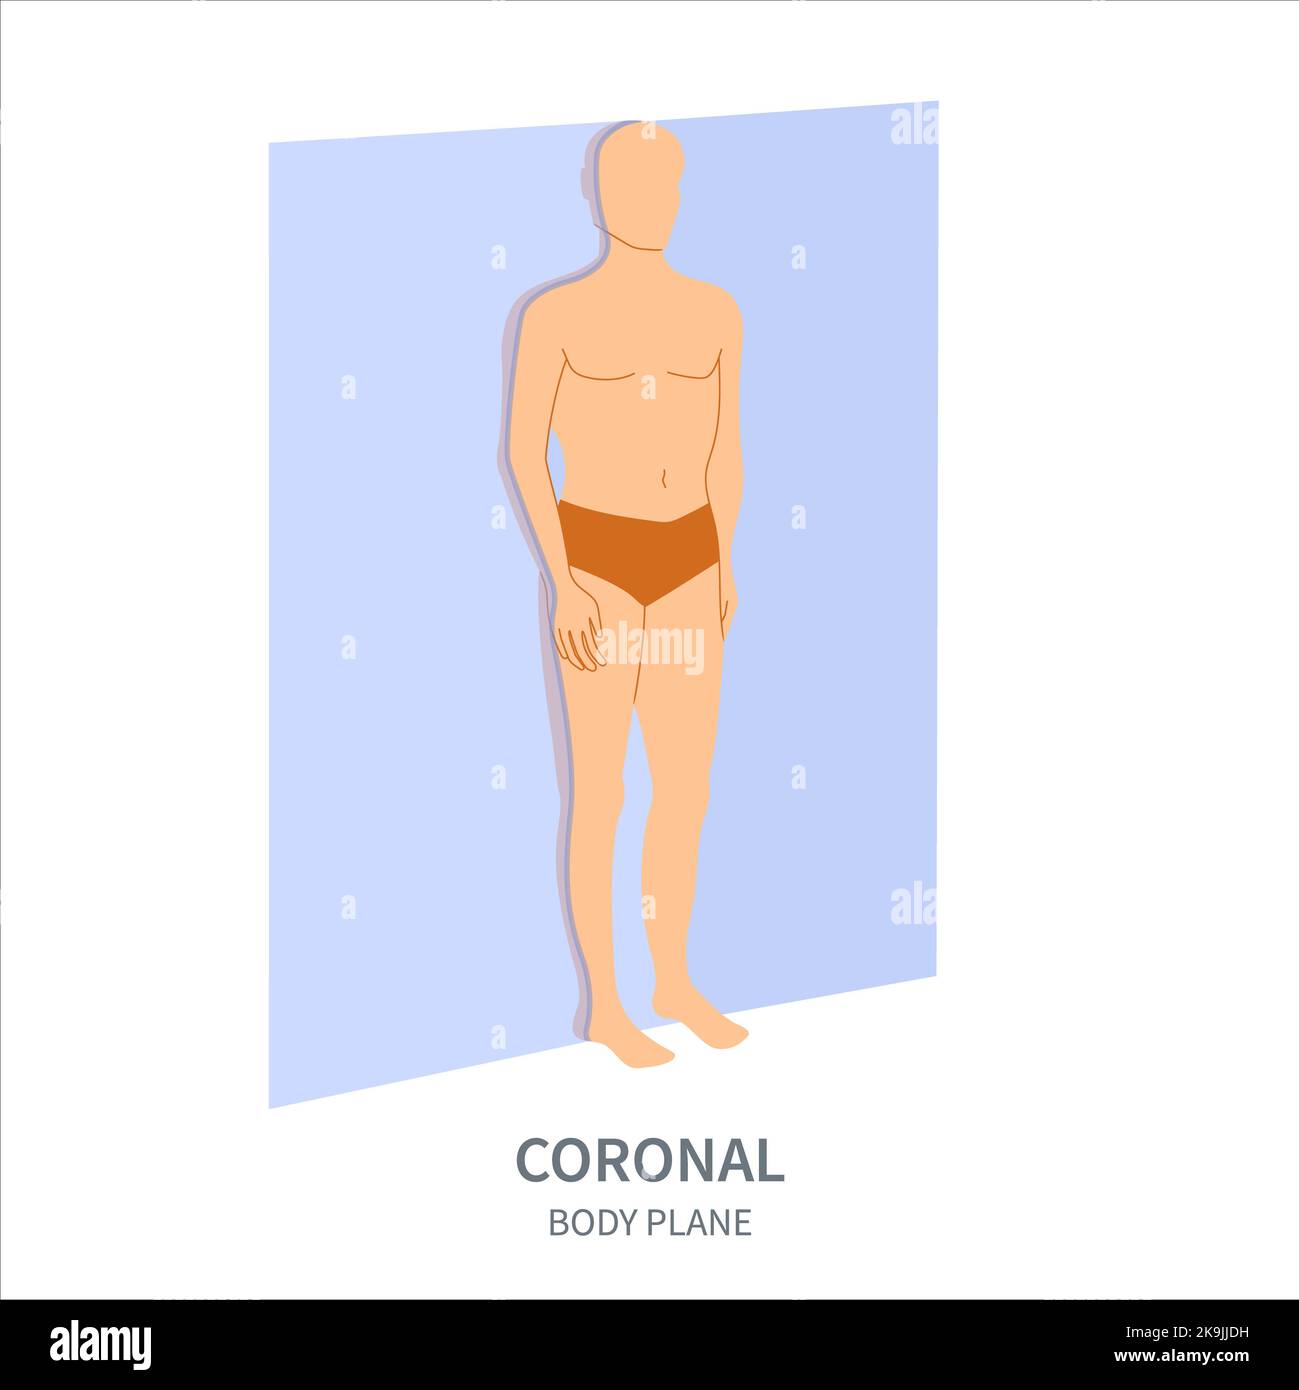 Coronal body plane, illustration Stock Photo